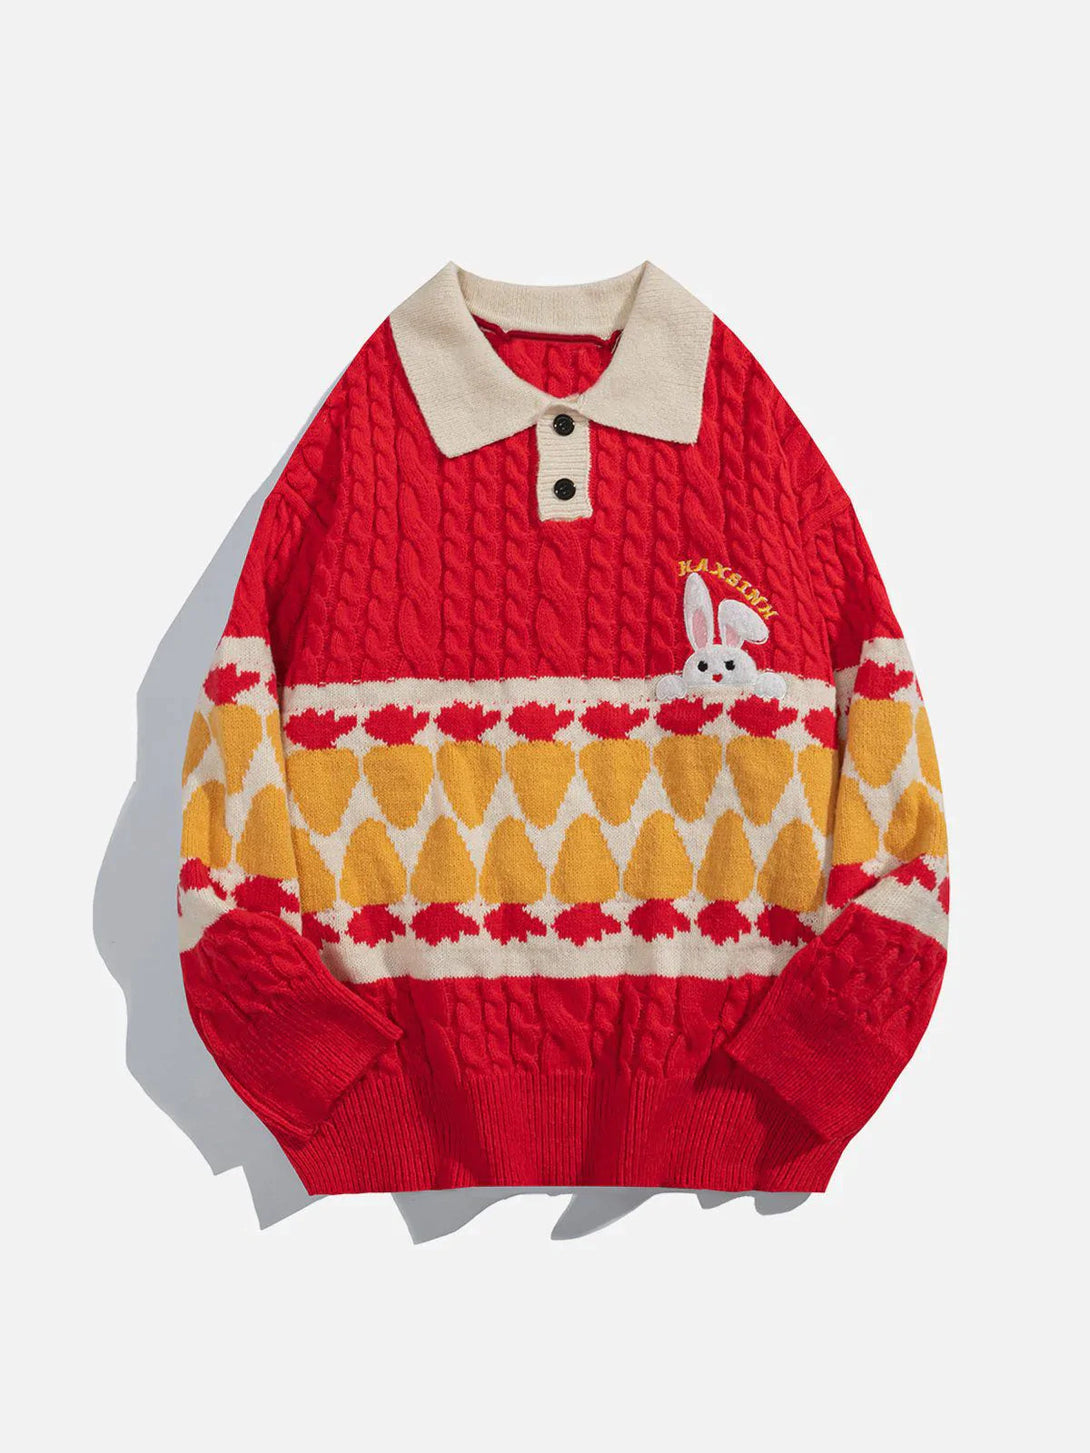 Majesda® - Radish Rabbit Jacquard Sweater outfit ideas streetwear fashion